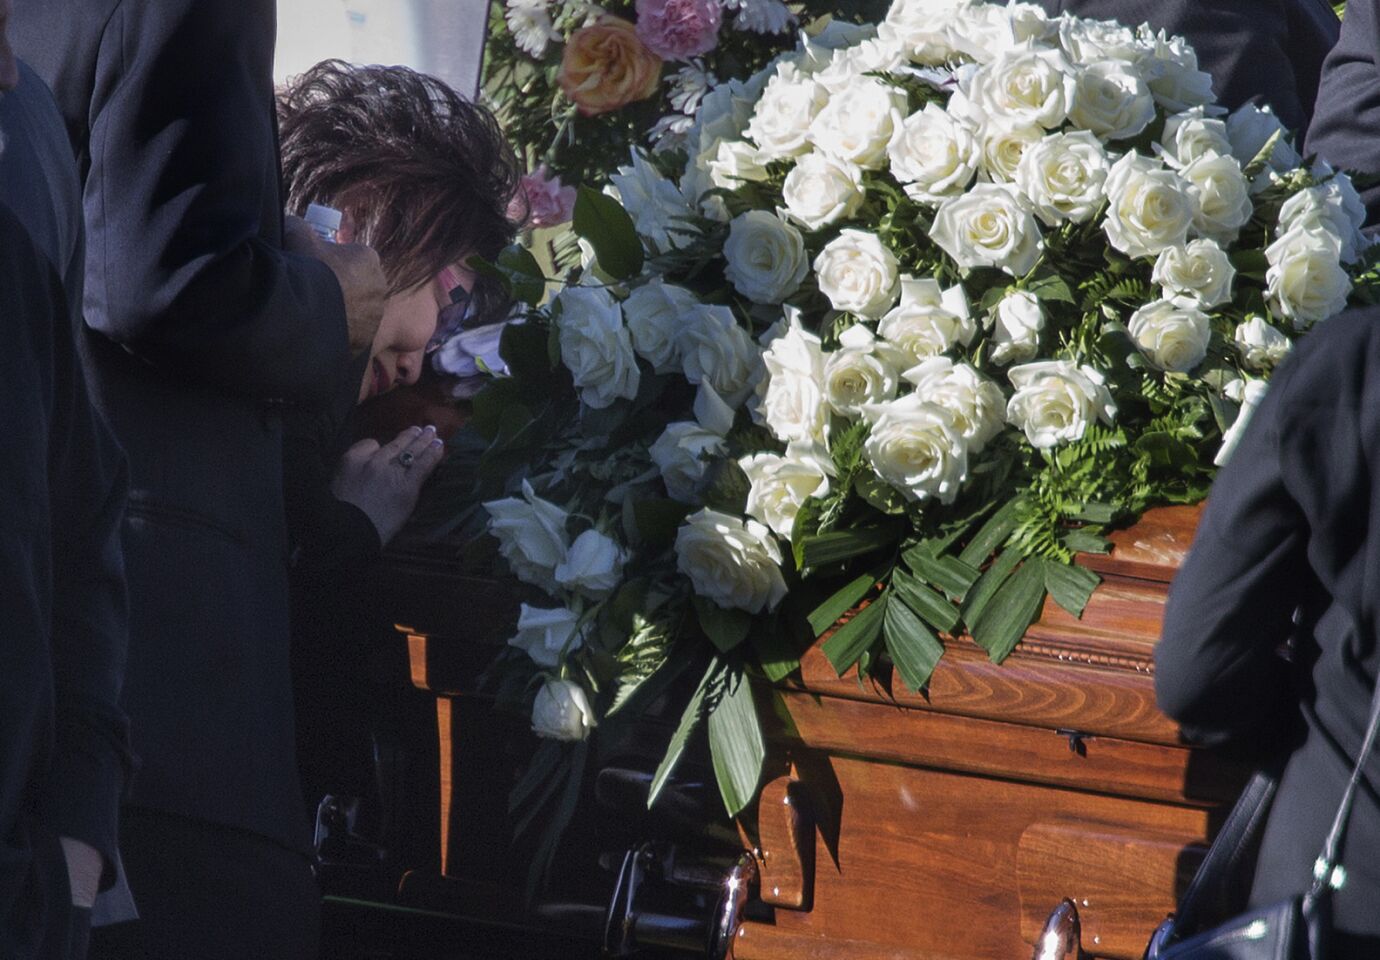 Robert Adams' funeral